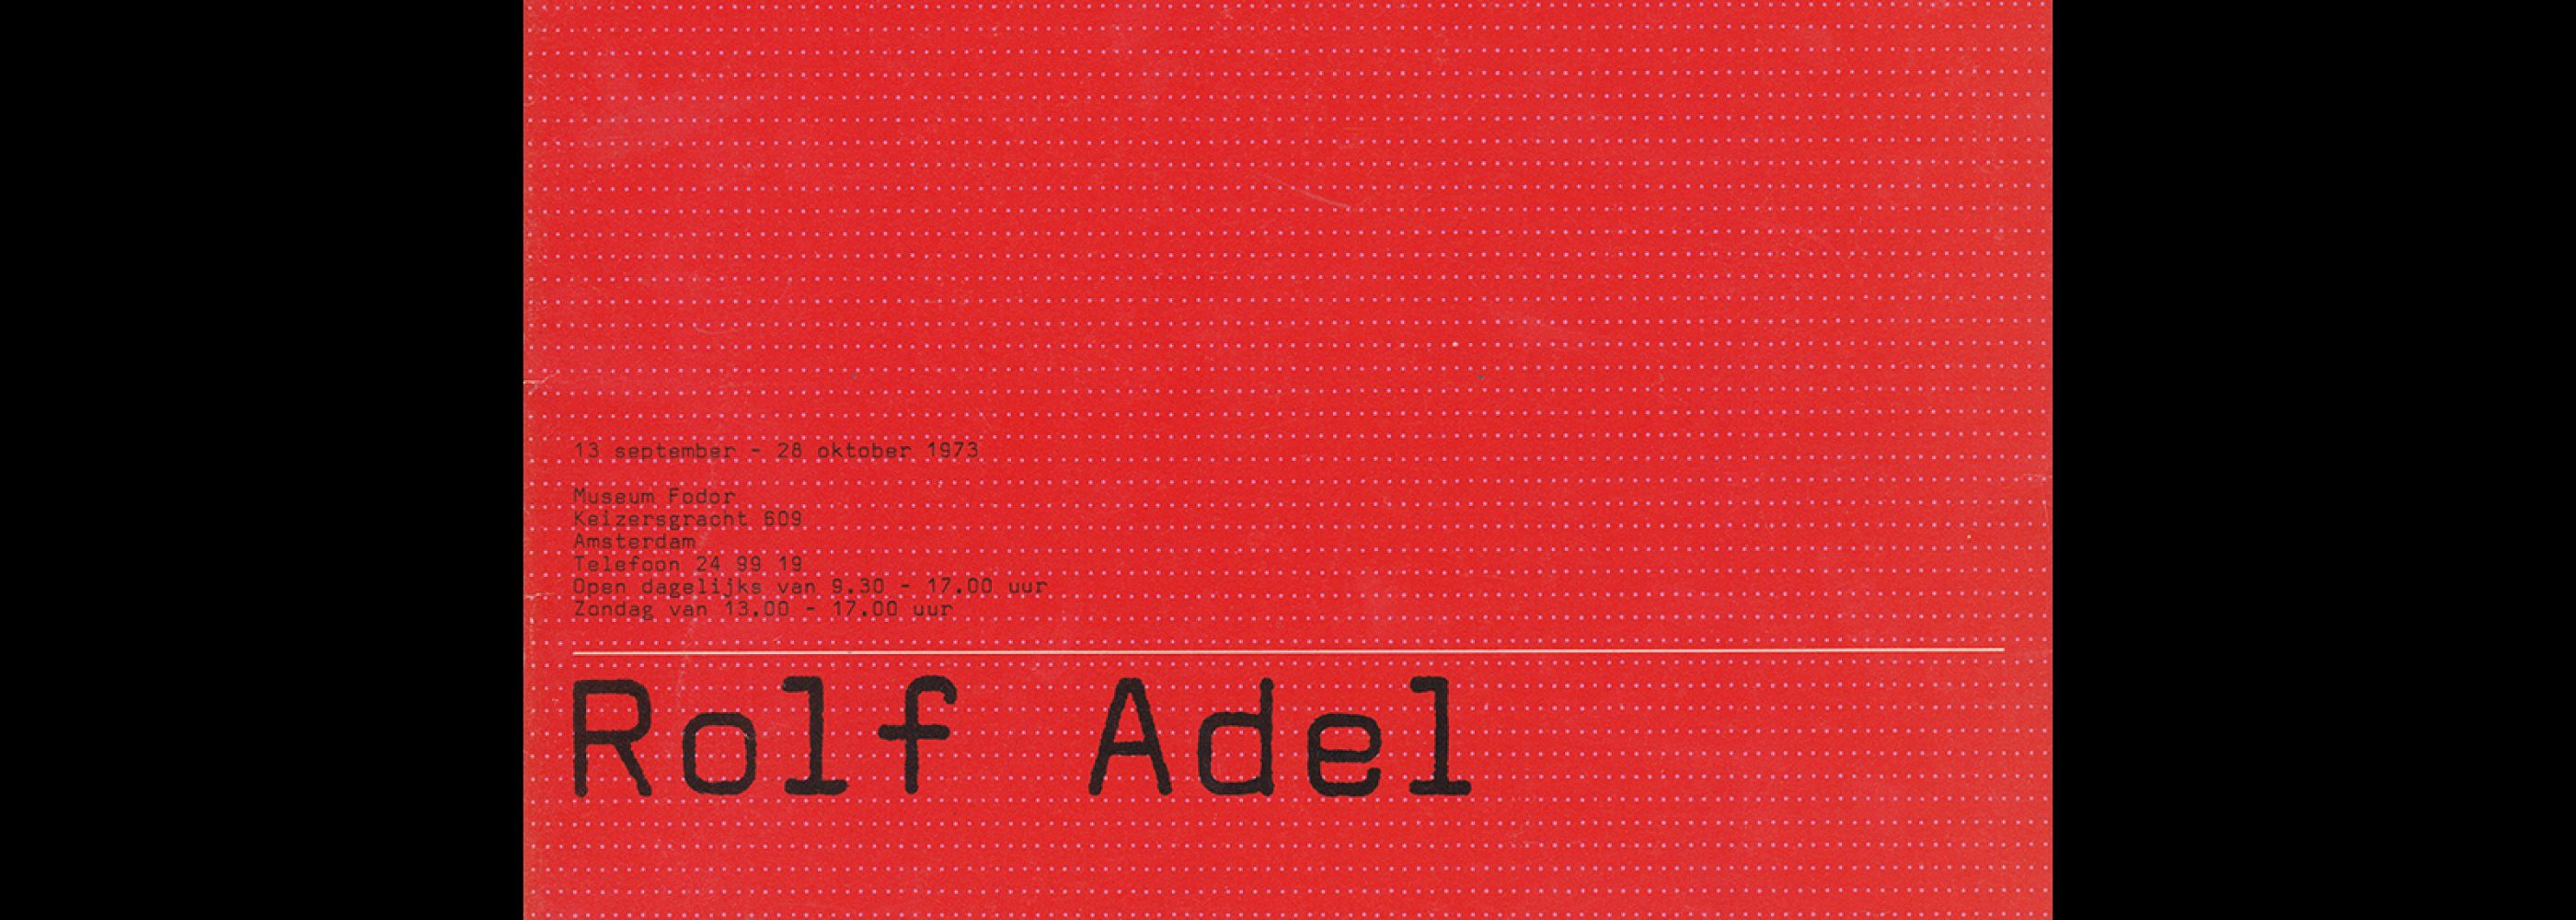 Fodor 13, 1973 - Rolf Adel. Designed by Wim Crouwel and Dapne Duijvelshoff (Total Design).